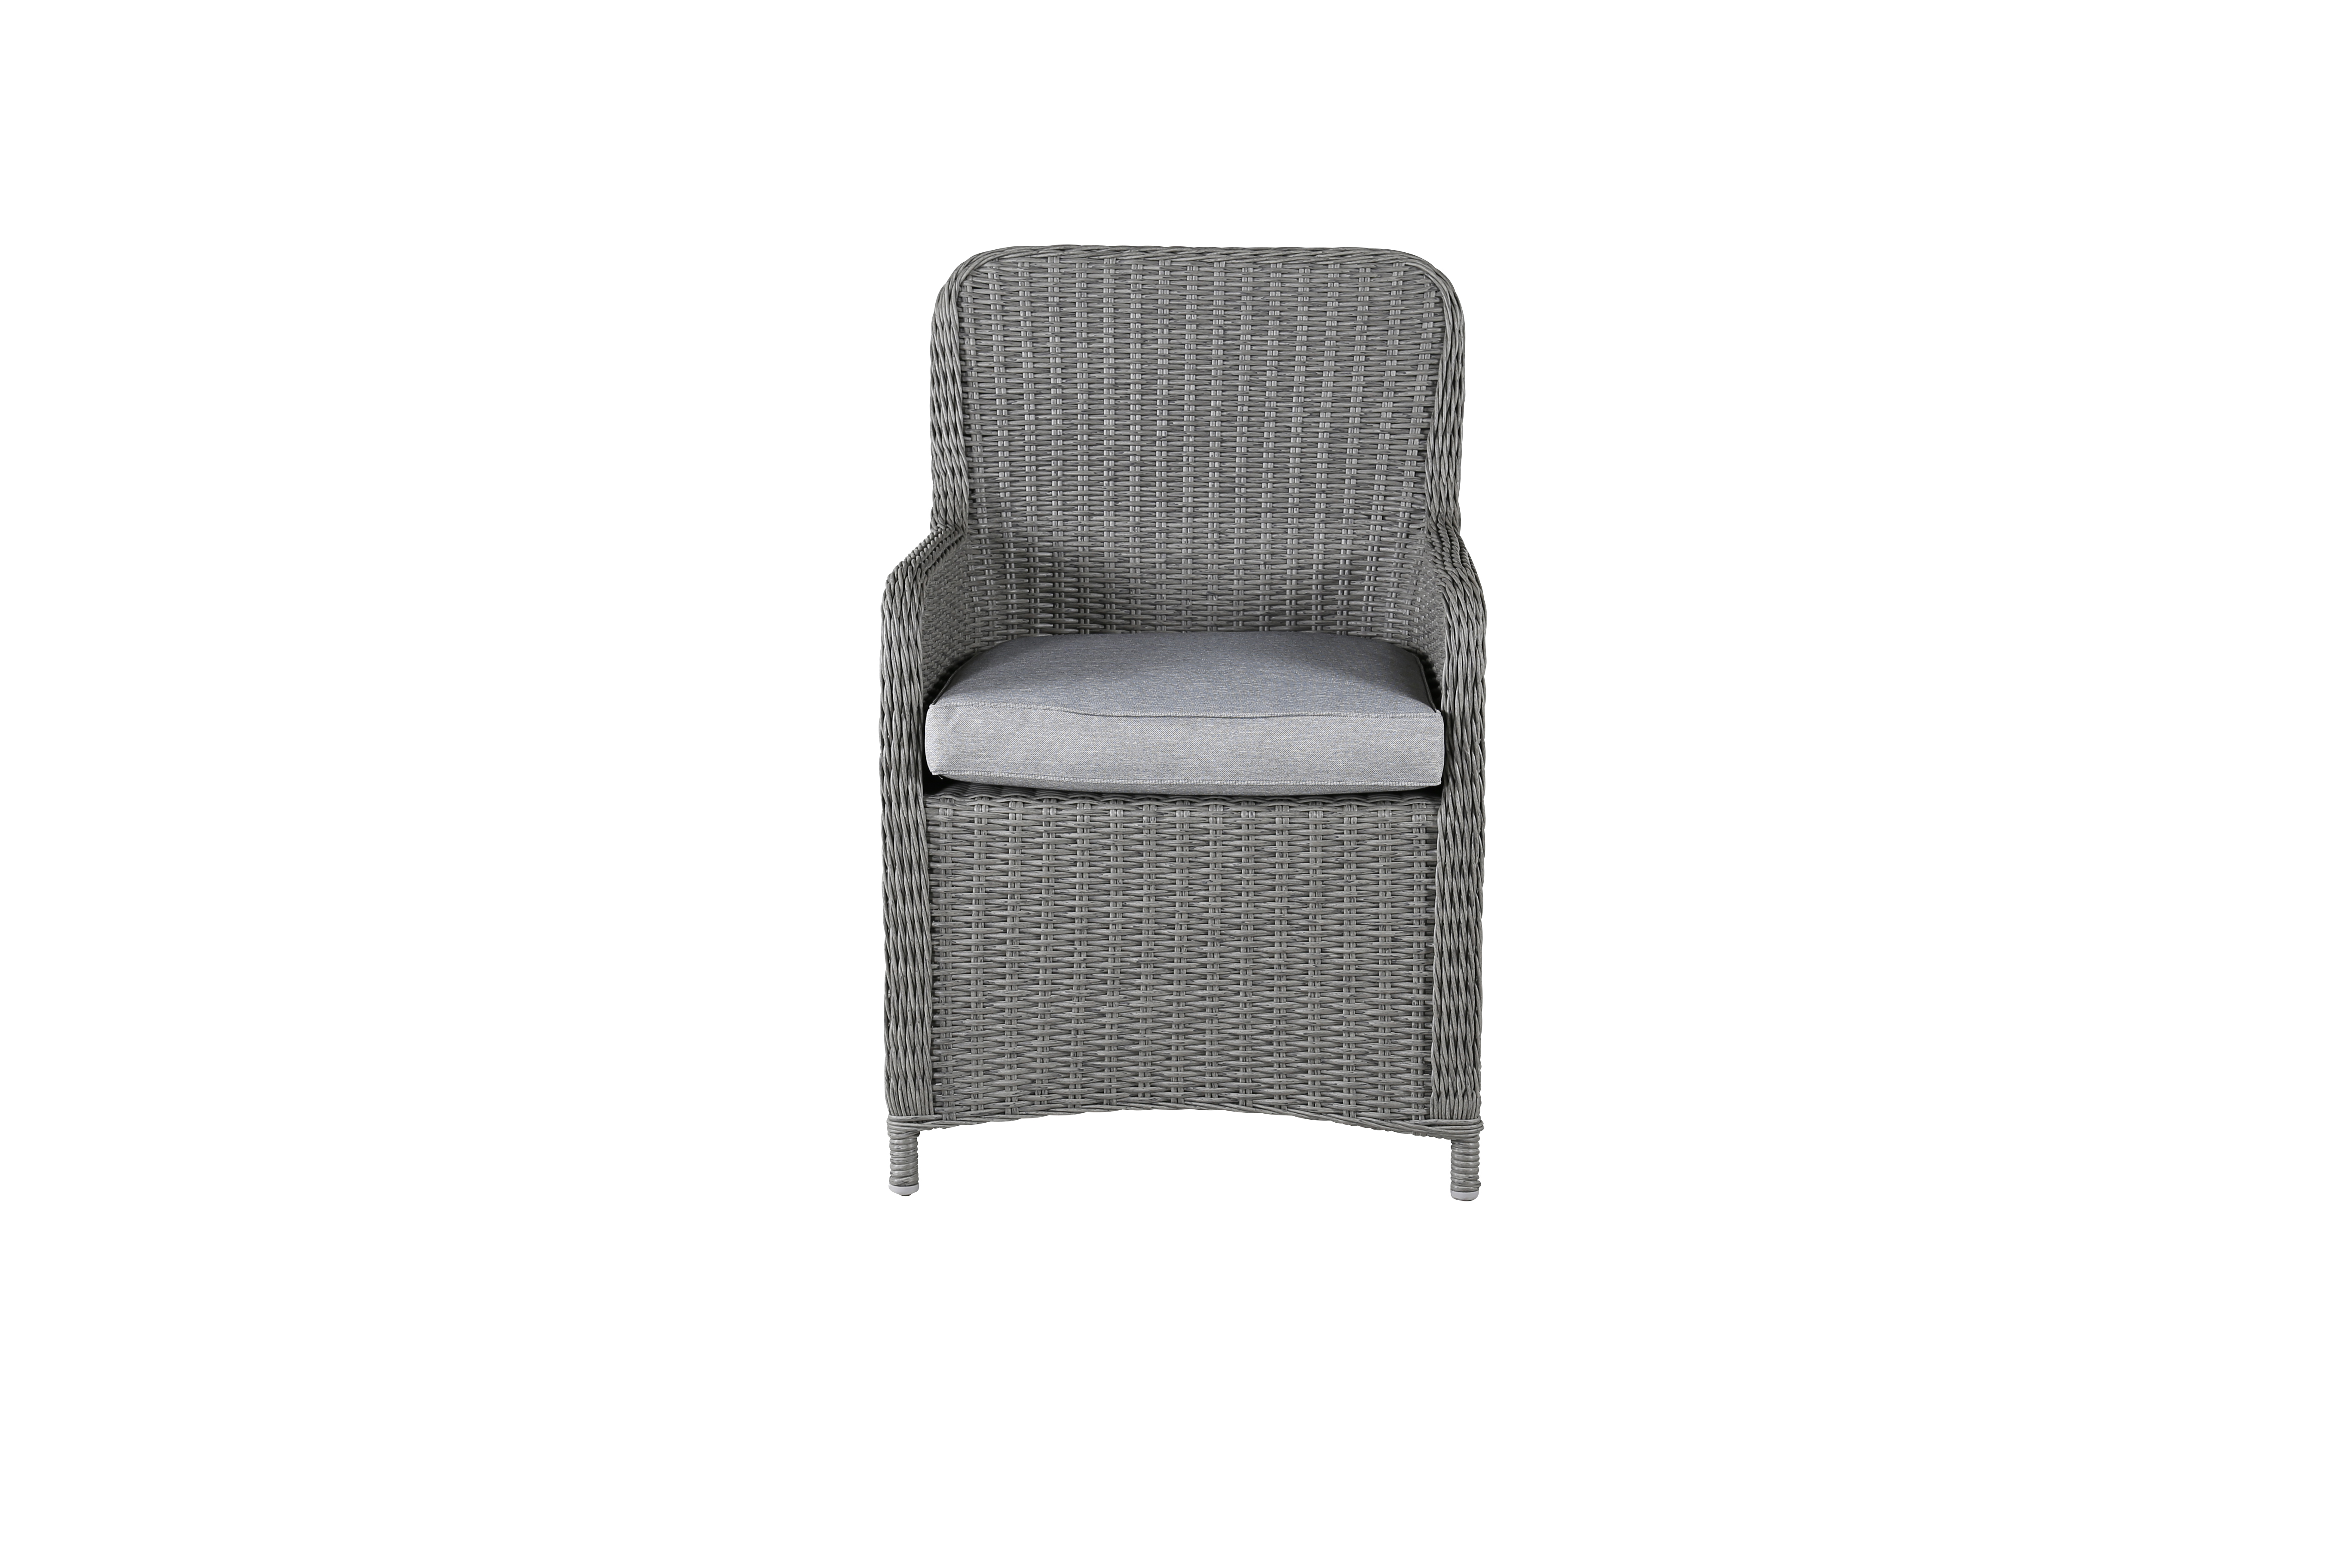 Venture Design - Wembley Garden Armchair with Cushion - Rattan - Grey/Grey (5710-089)